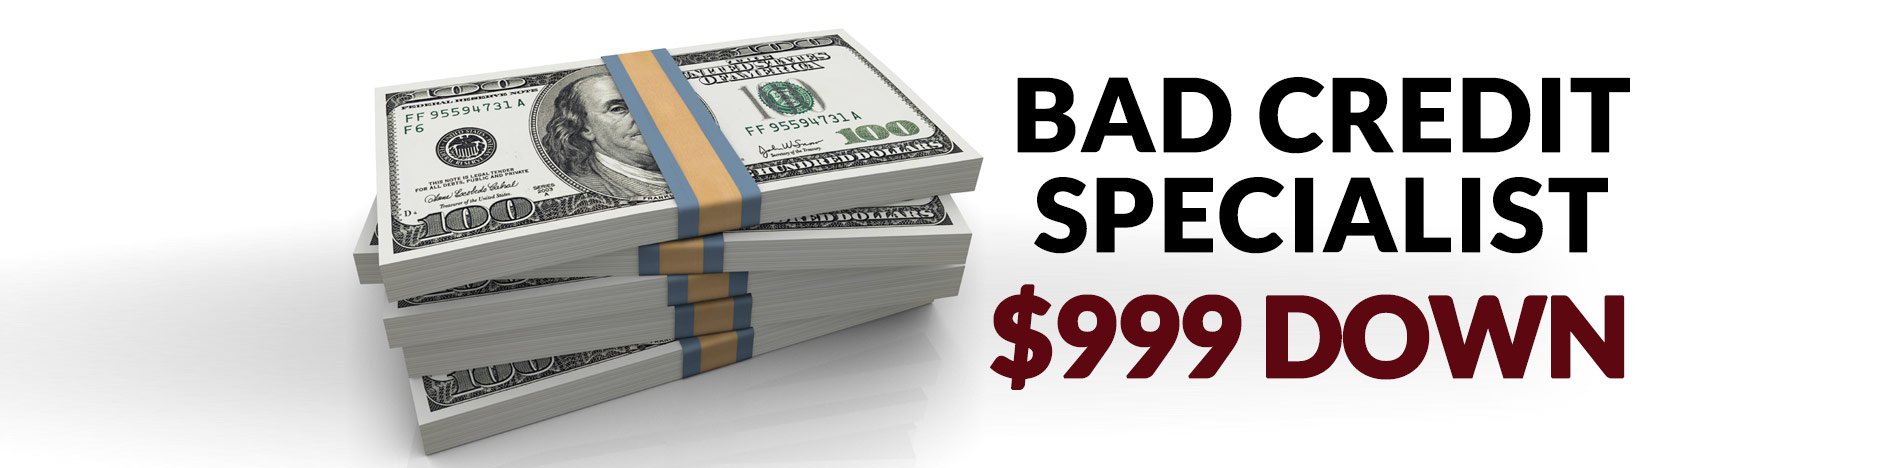 Bad Credit Specialist $999 Down